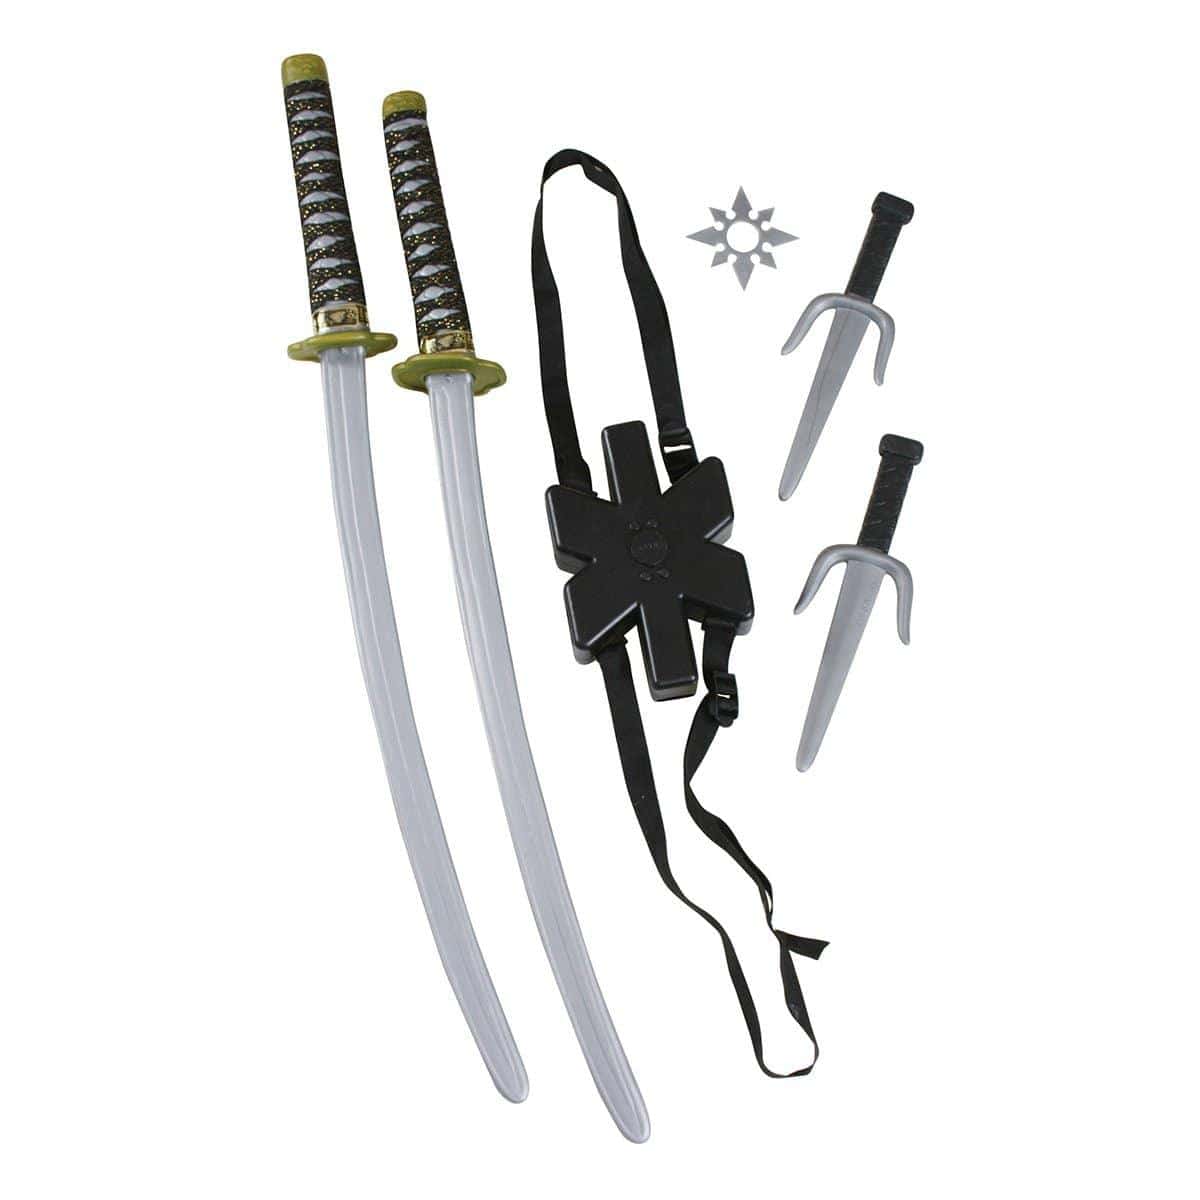 Buy Costume Accessories Ninja double sword set sold at Party Expert